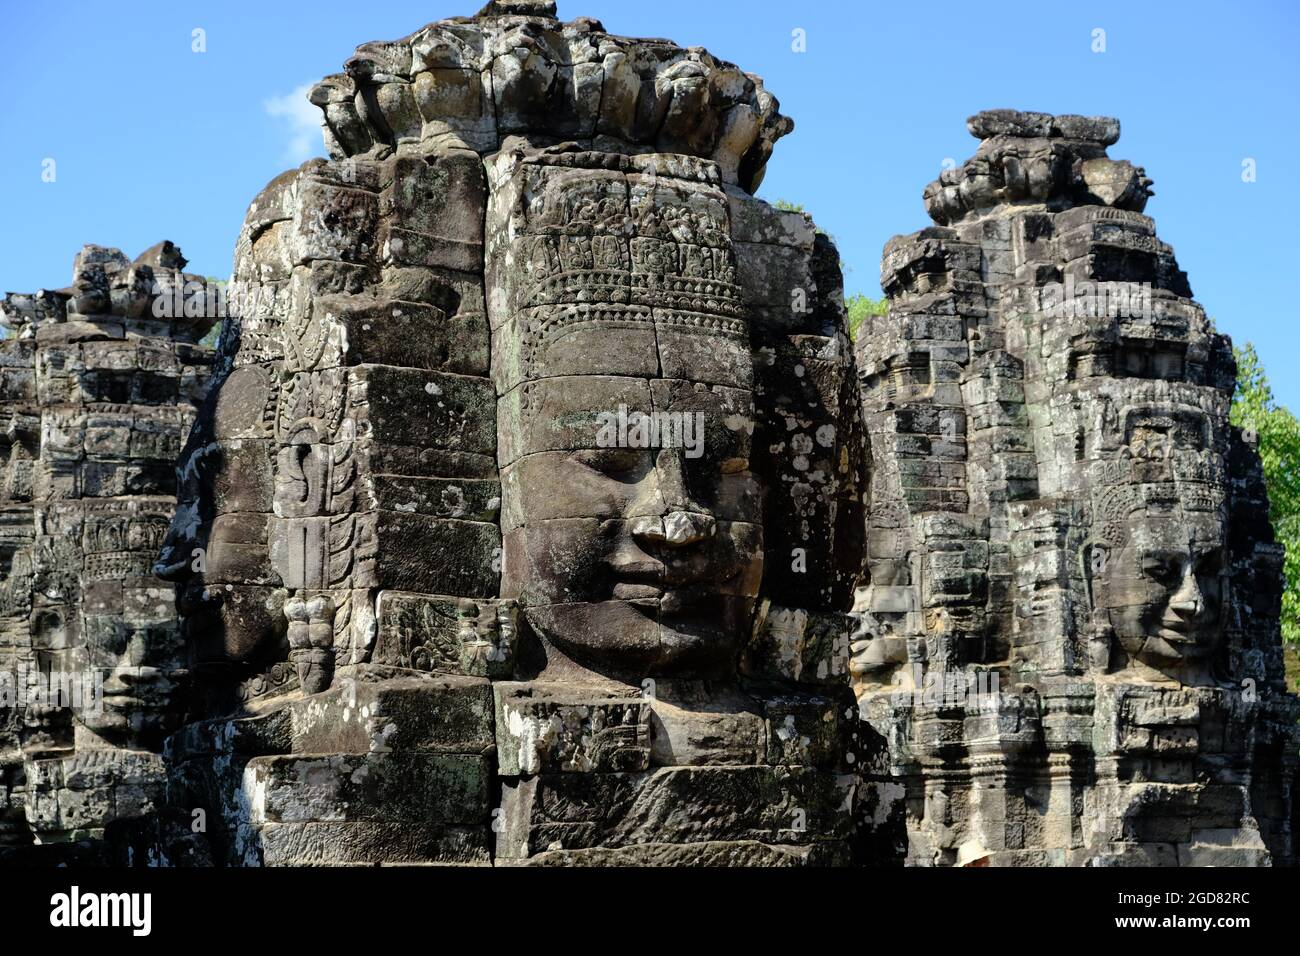 Kambodscha Krong Siem Reap Angkor Wat - Bayon Tempel lächelnde Gesichter in Steinmauern geschnitzt Stockfoto